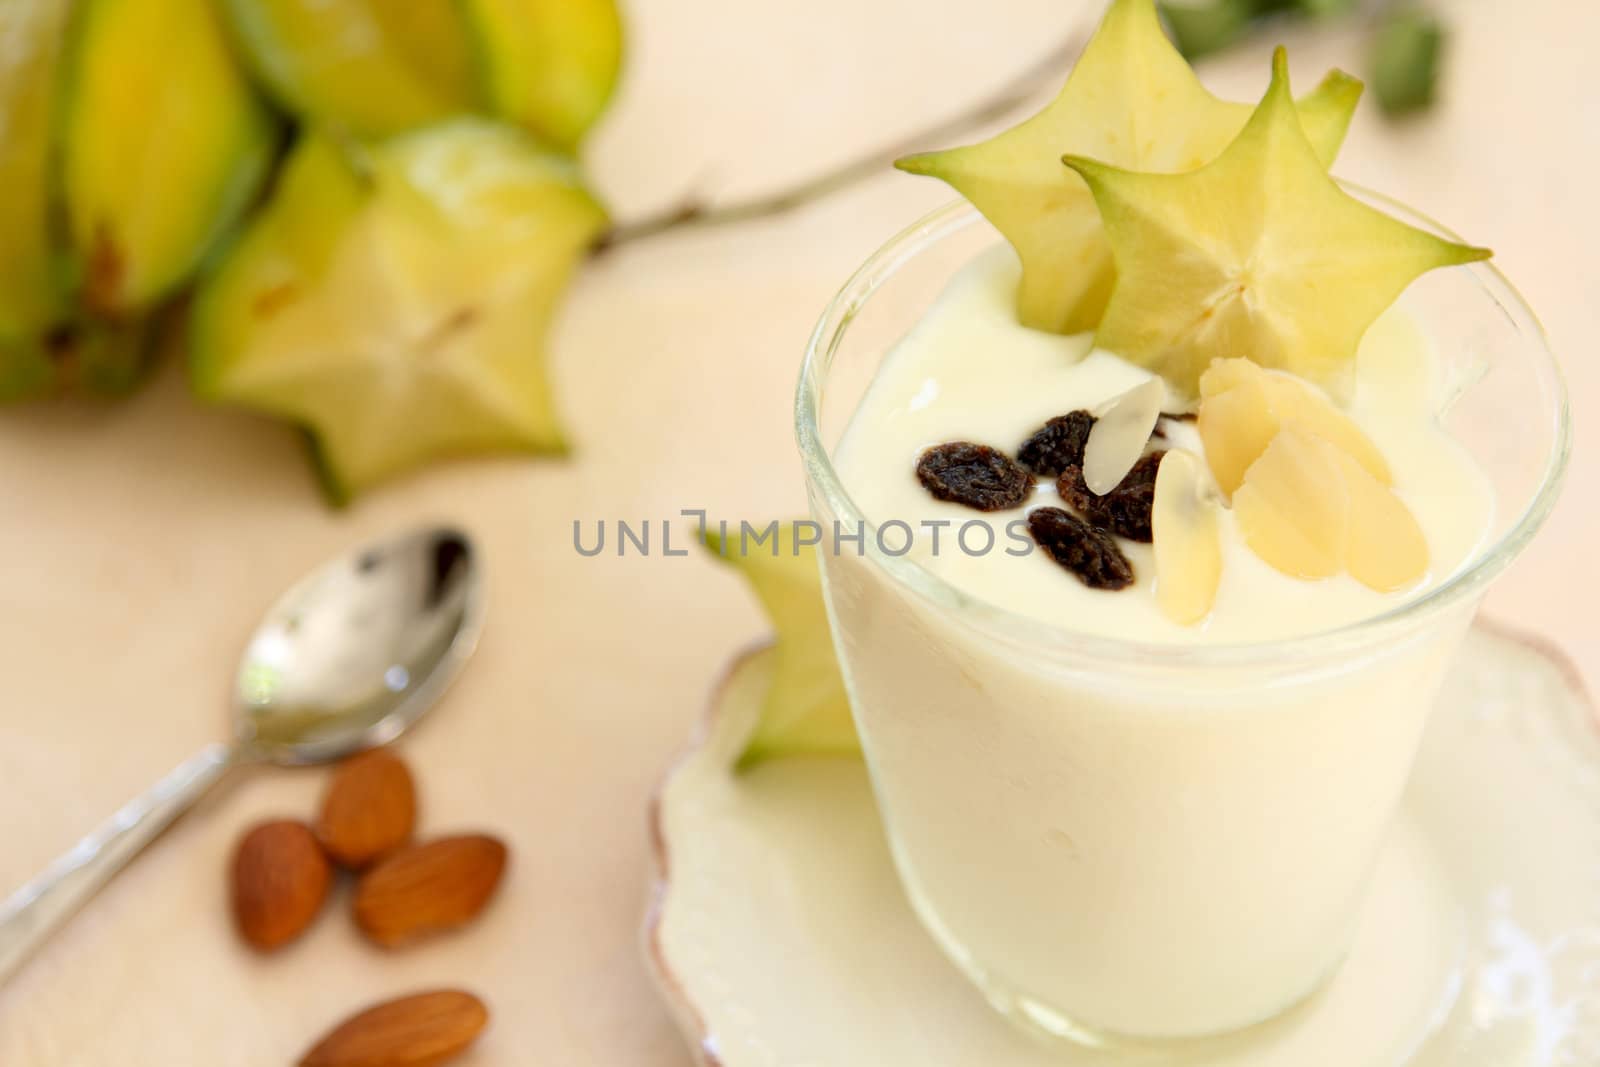 Healthy breakfast [yogurt with almond and starfruit ]